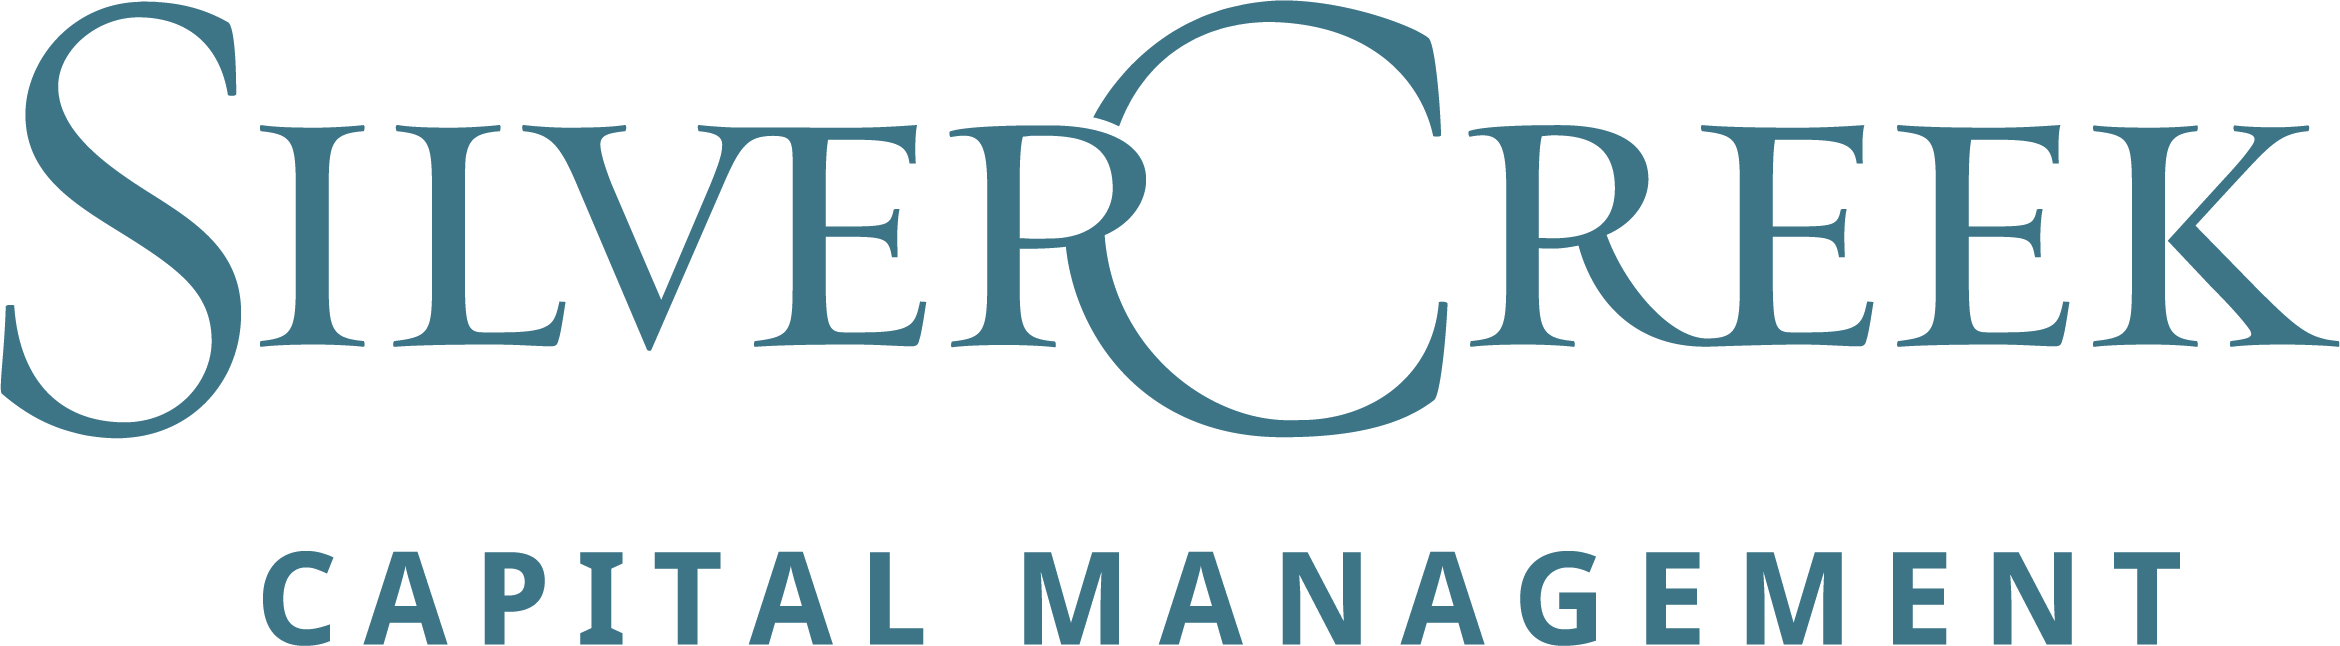 Silver Creek Capital Management